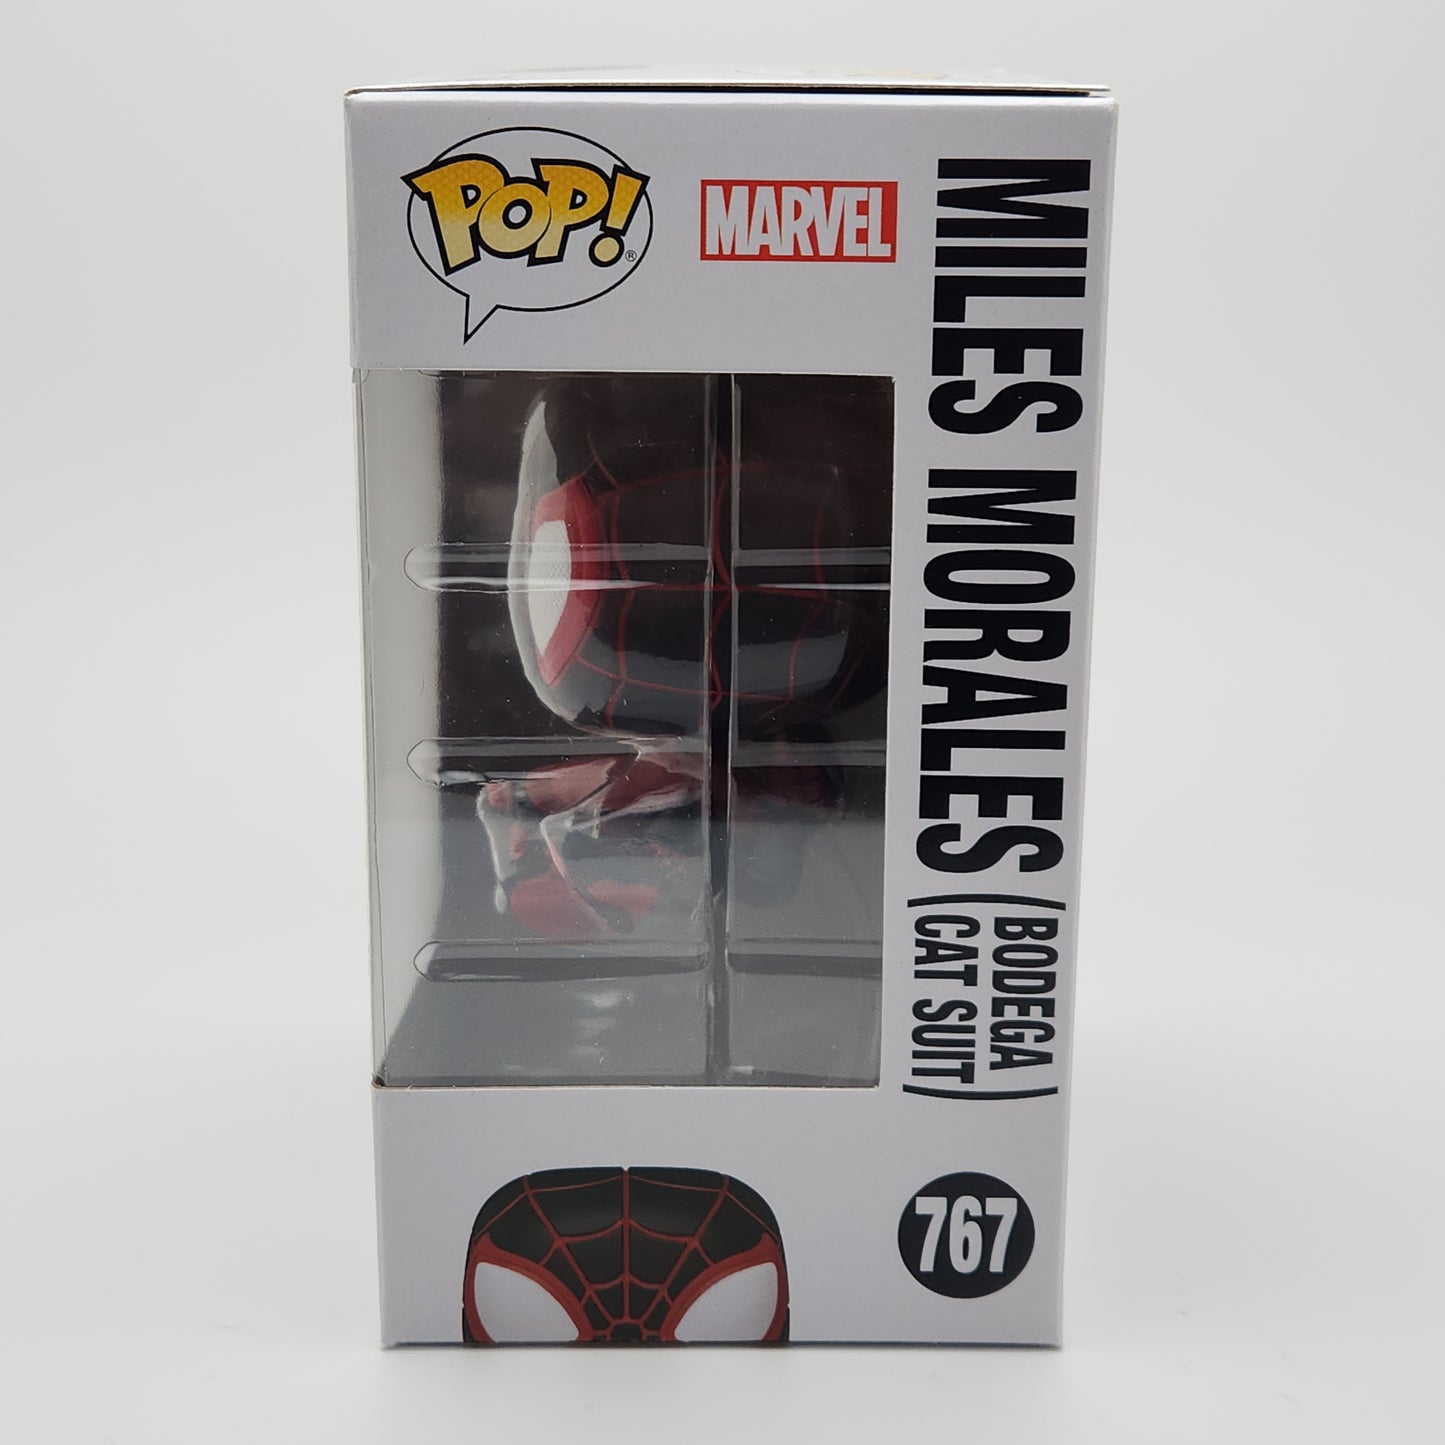 Funko Pop! Marvel- Spider-Man: Miles Morales (Bodega Cat Suit)